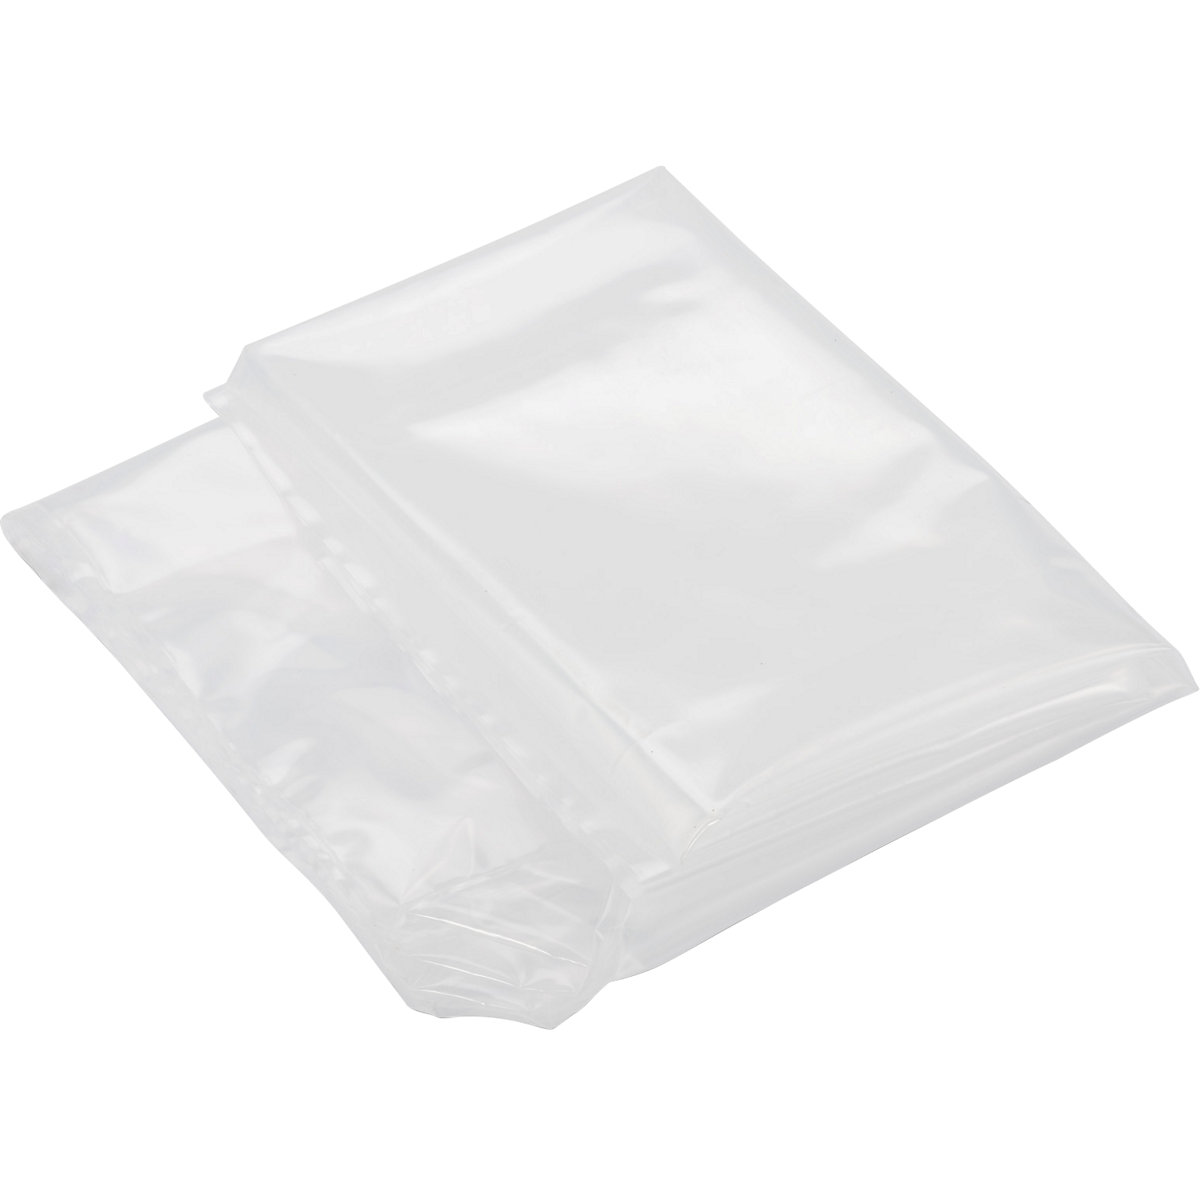 Plastic liner bag - CEMO